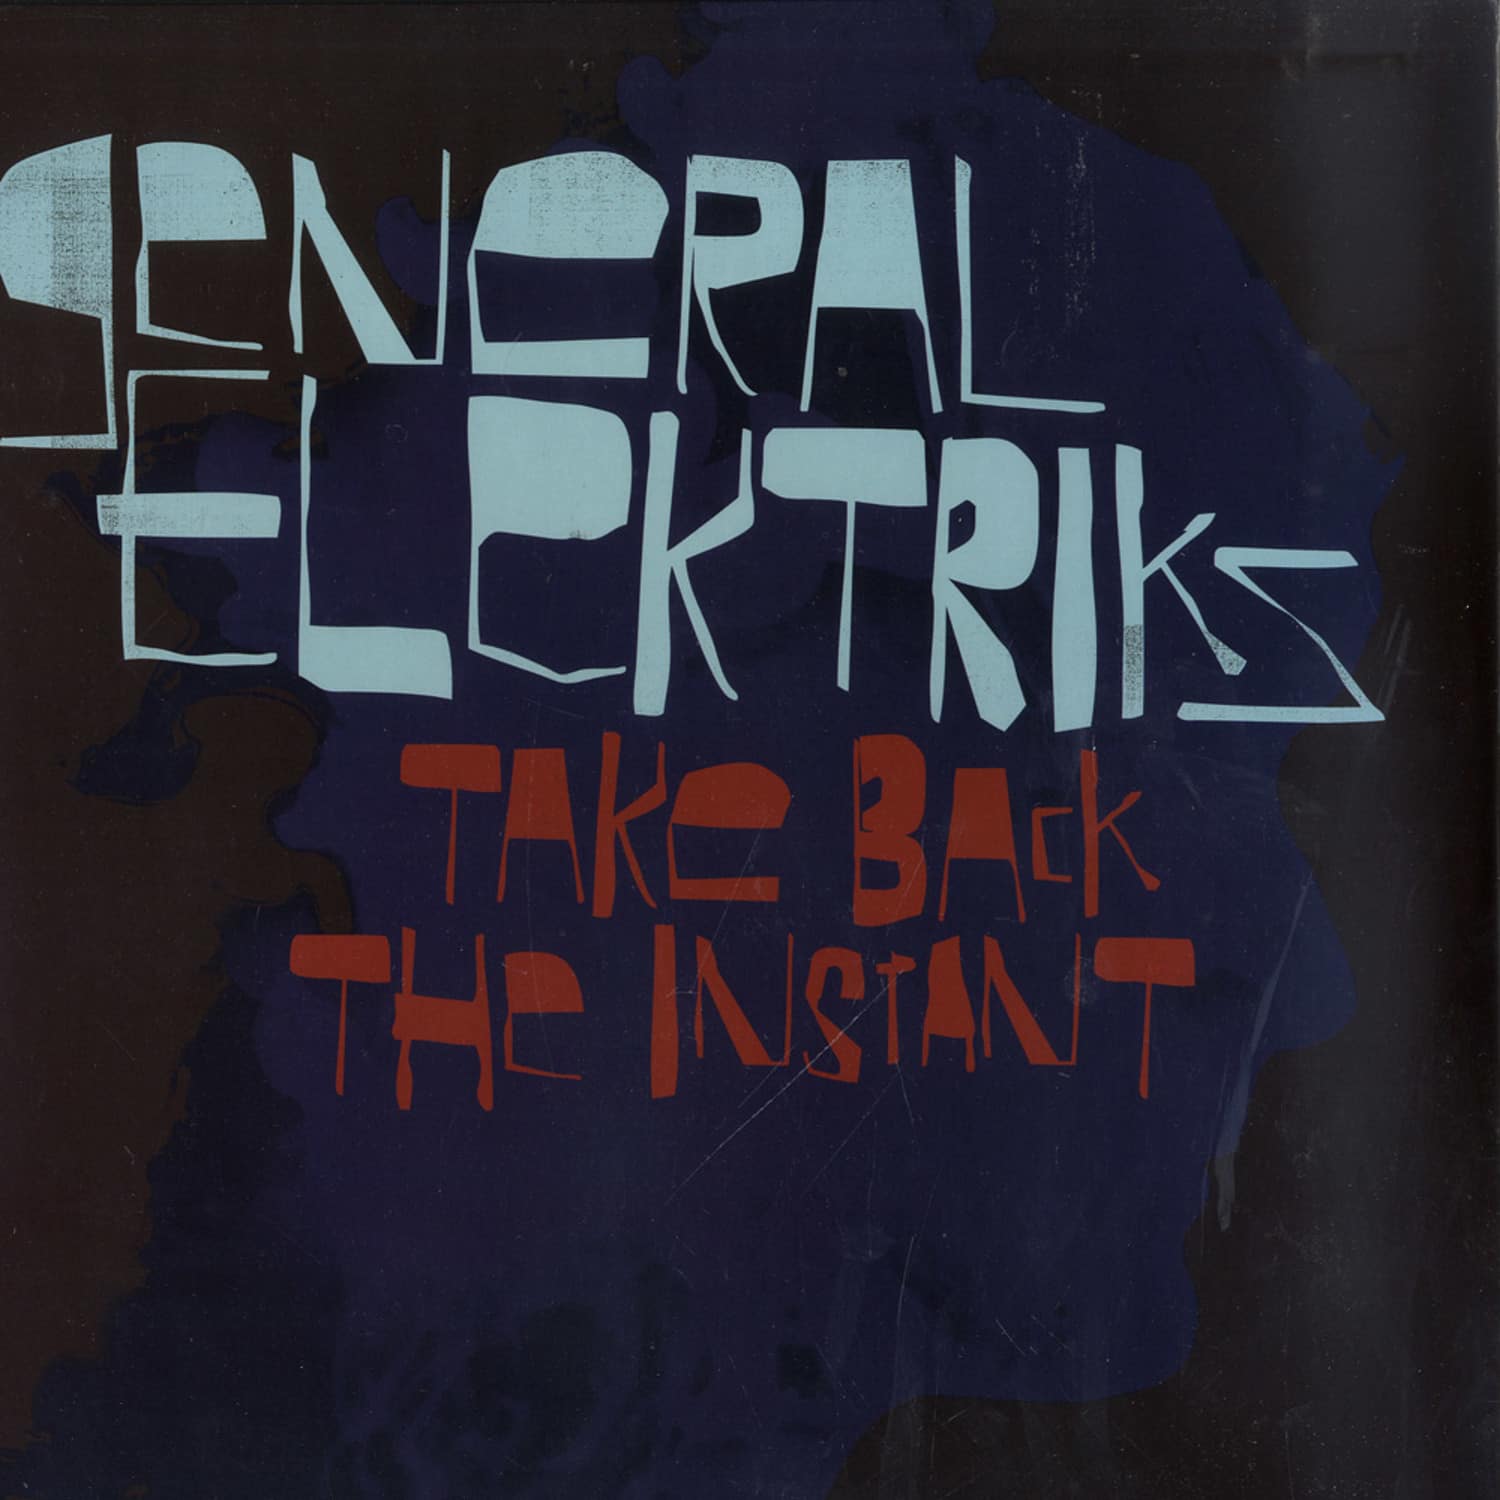 General Elektriks - TAKE BACK THE INSTANT